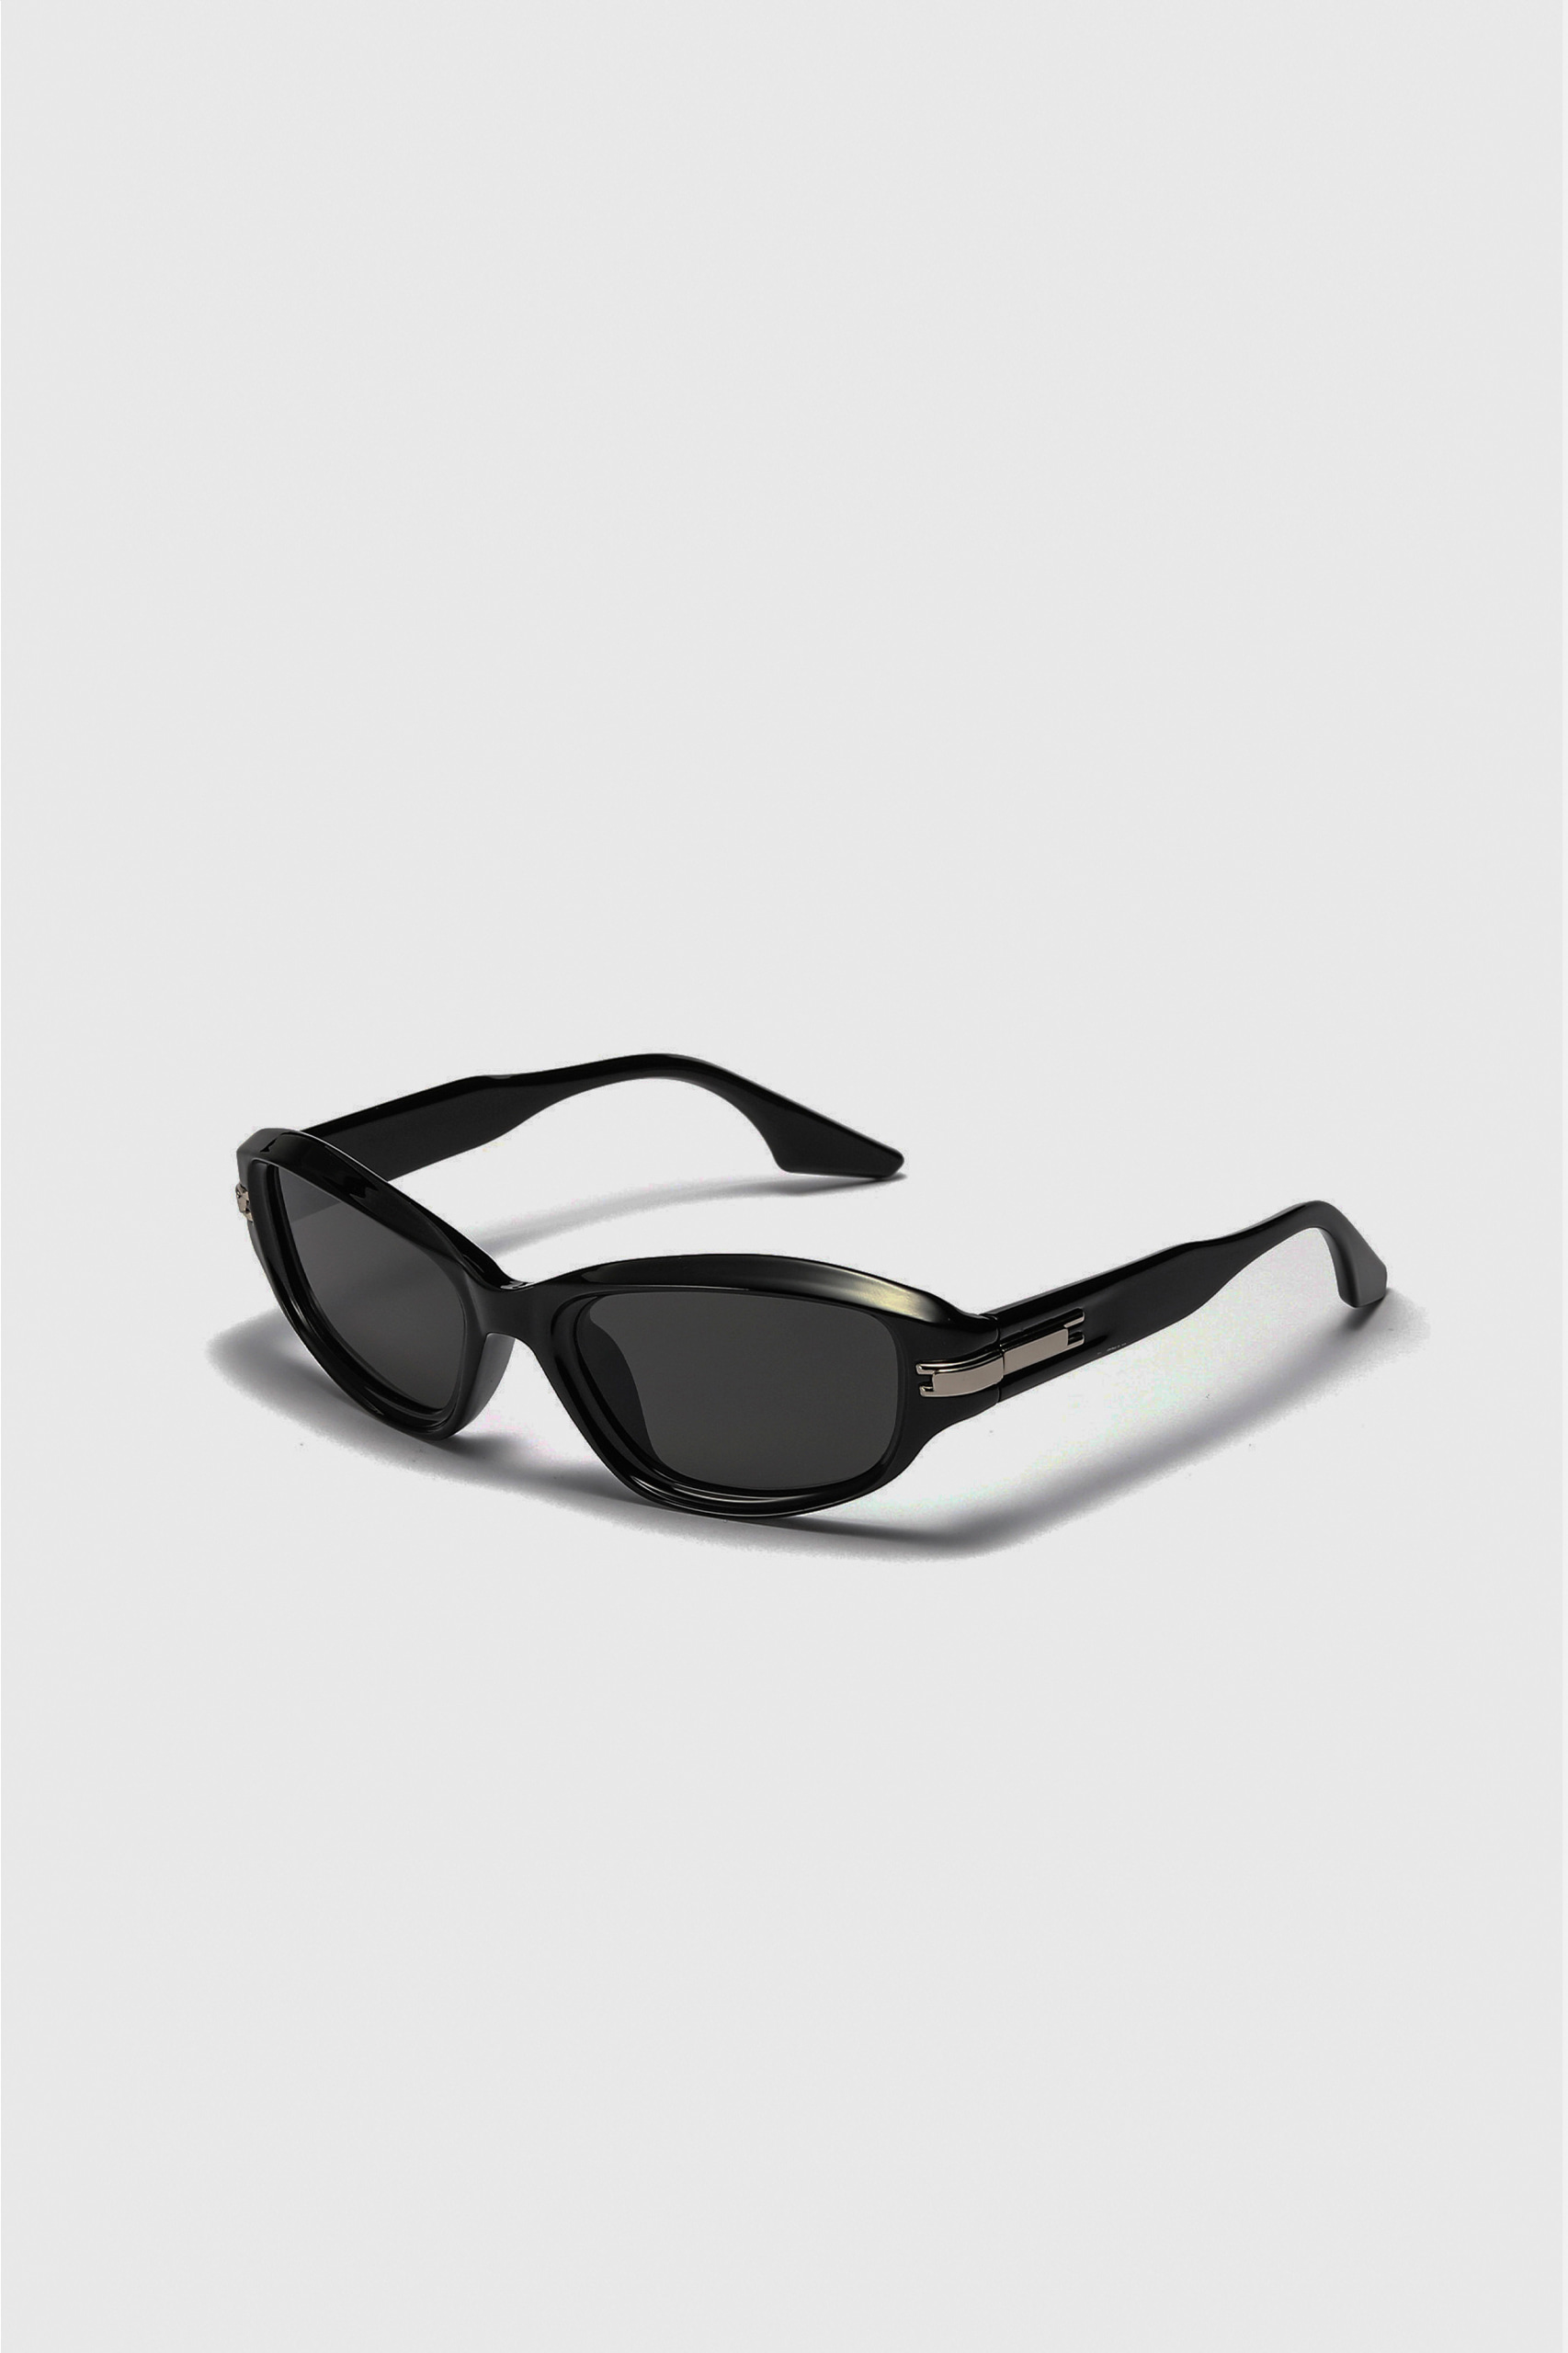 Project Sunglasses 001 (4 color)